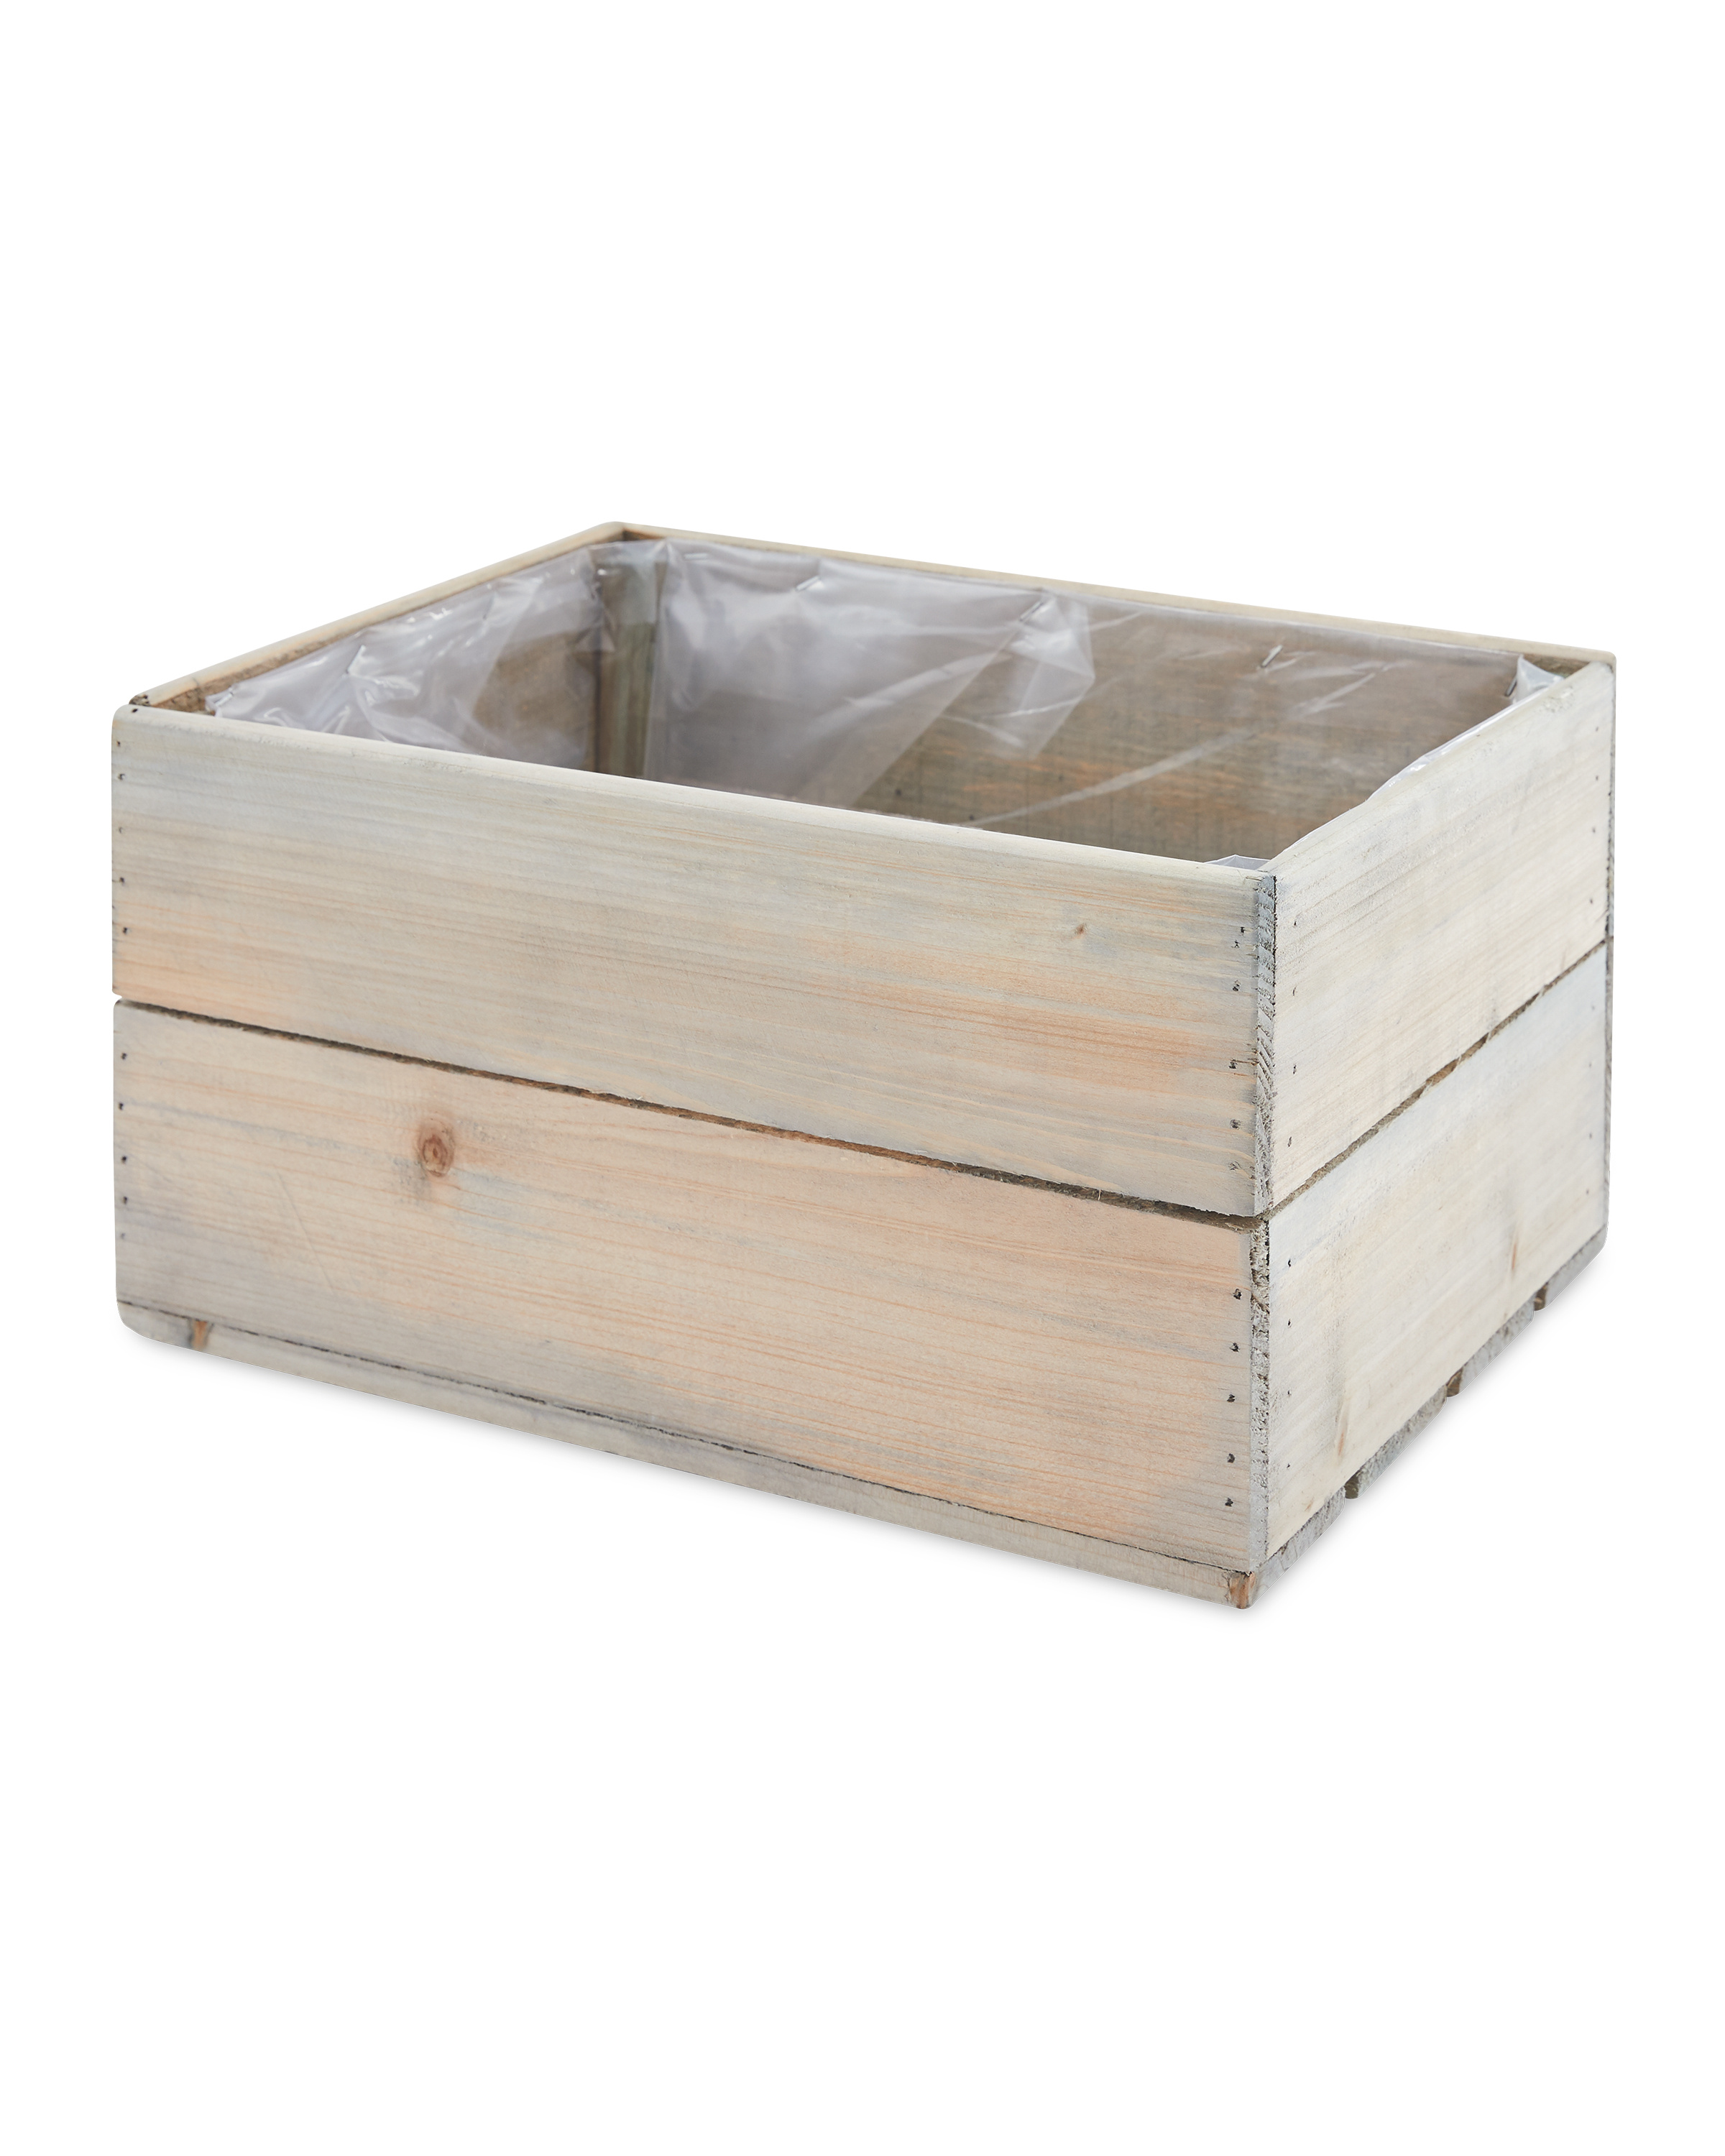 Wooden Crate Planter Aldi Uk, Wooden Crate On Wheels Uk